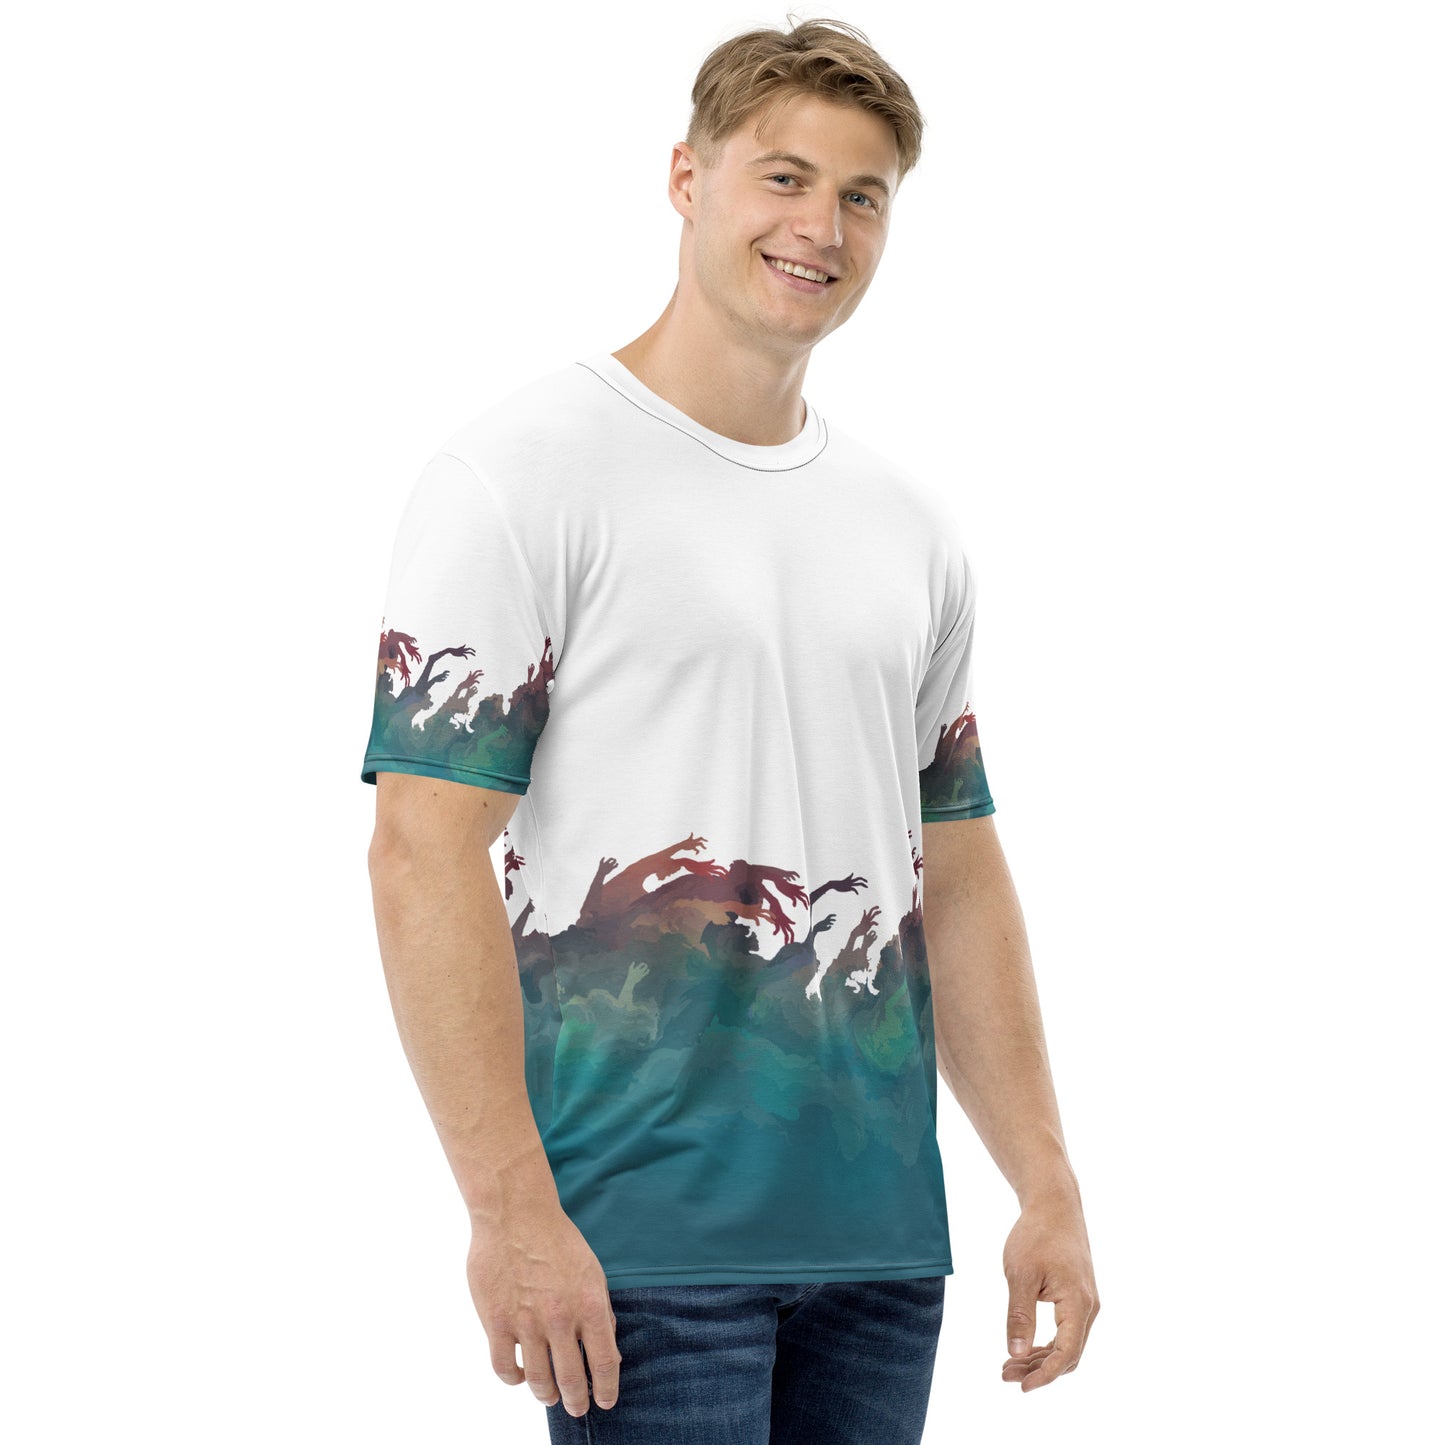 Men's Pain Arms t-shirt